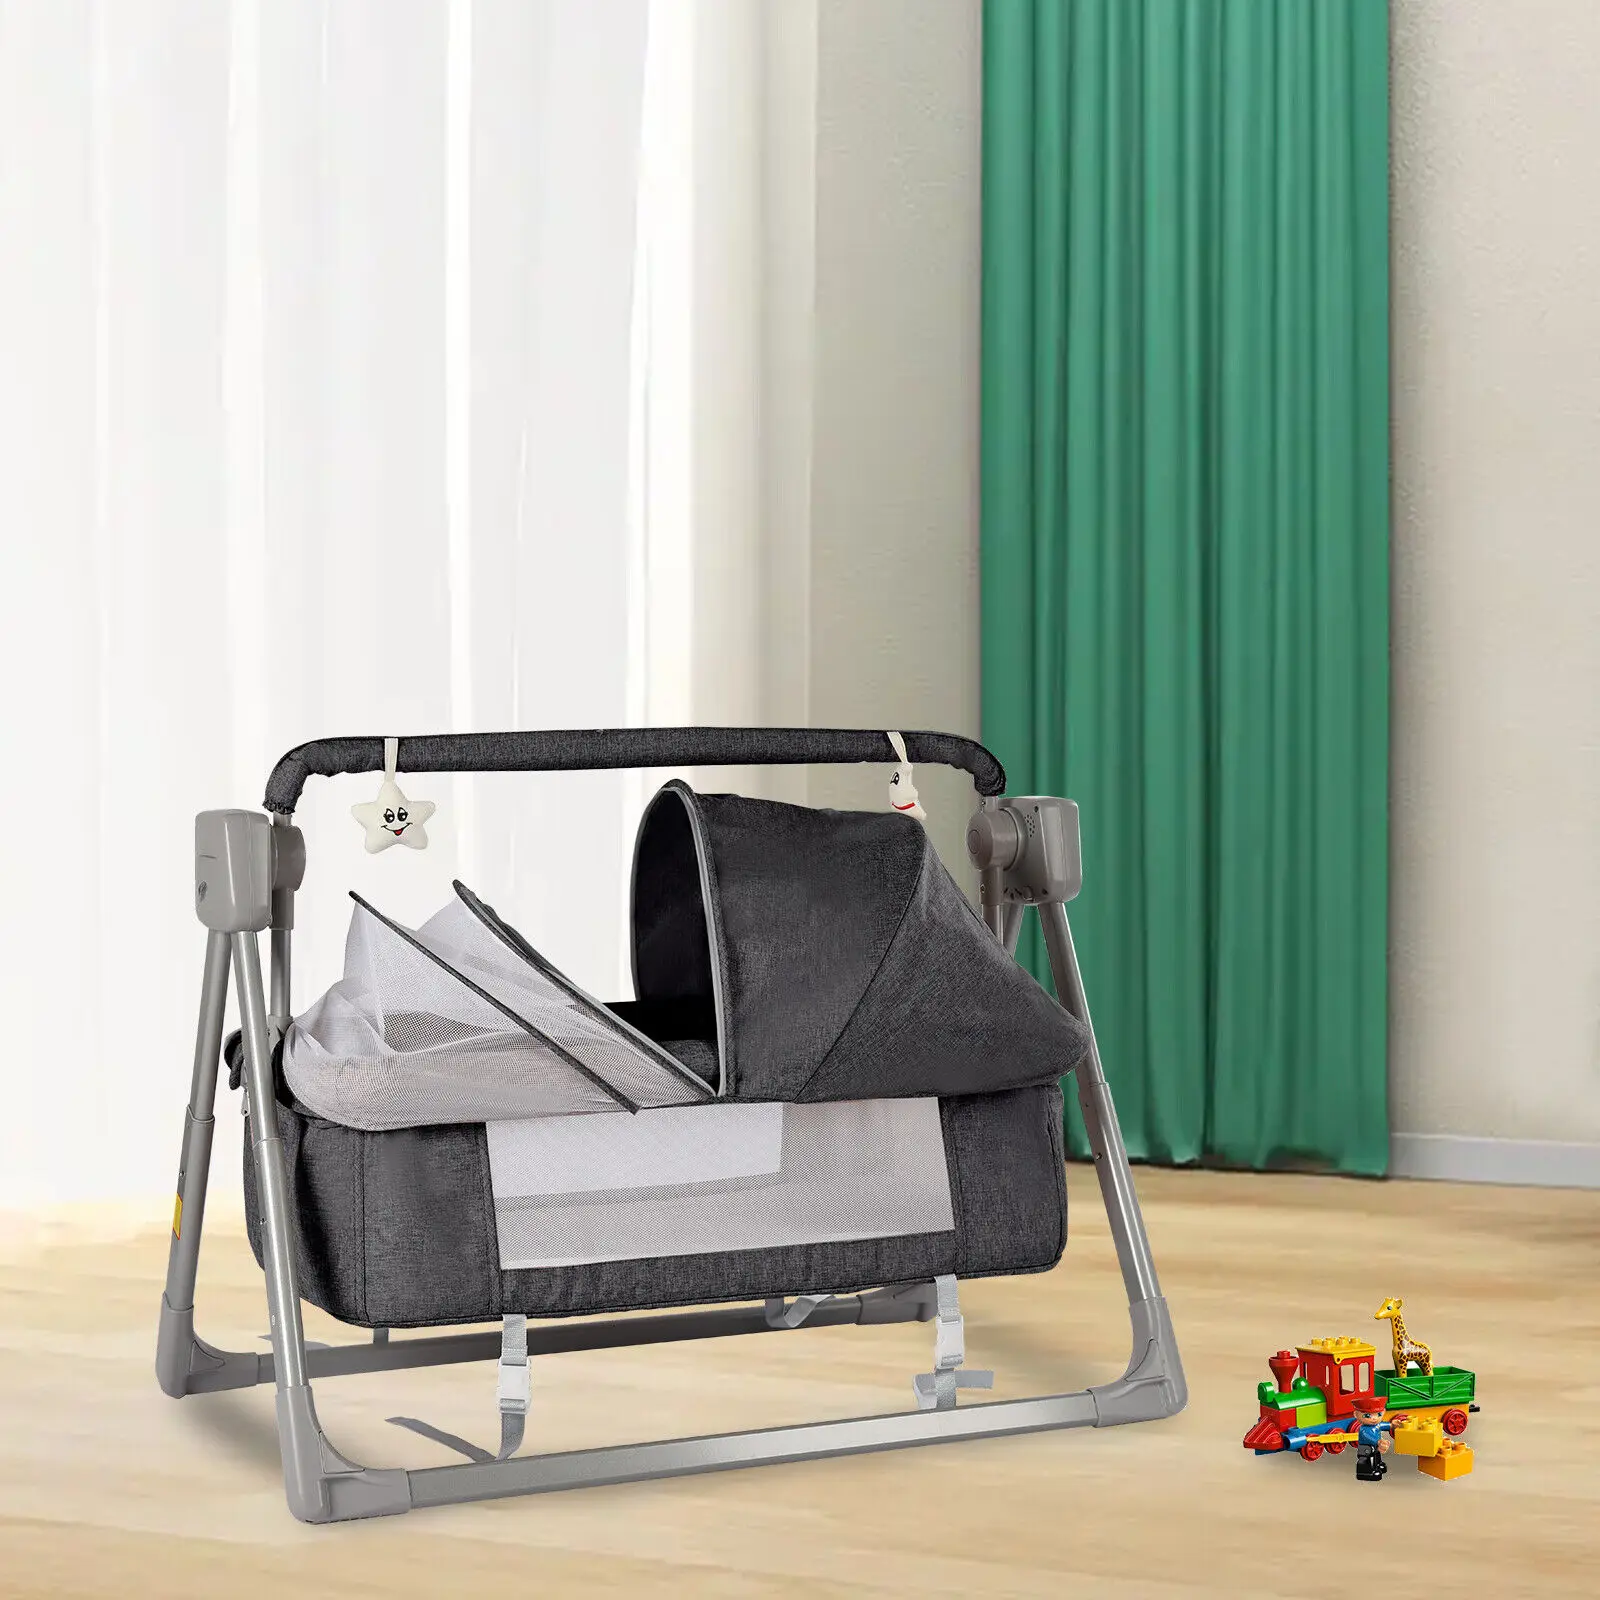 

Electric Baby Cradle Swing Basket,5 Speed Baby Cradle Rocking Bed,Music Remoter Control Rocker Baby Sleeping Basket Cot